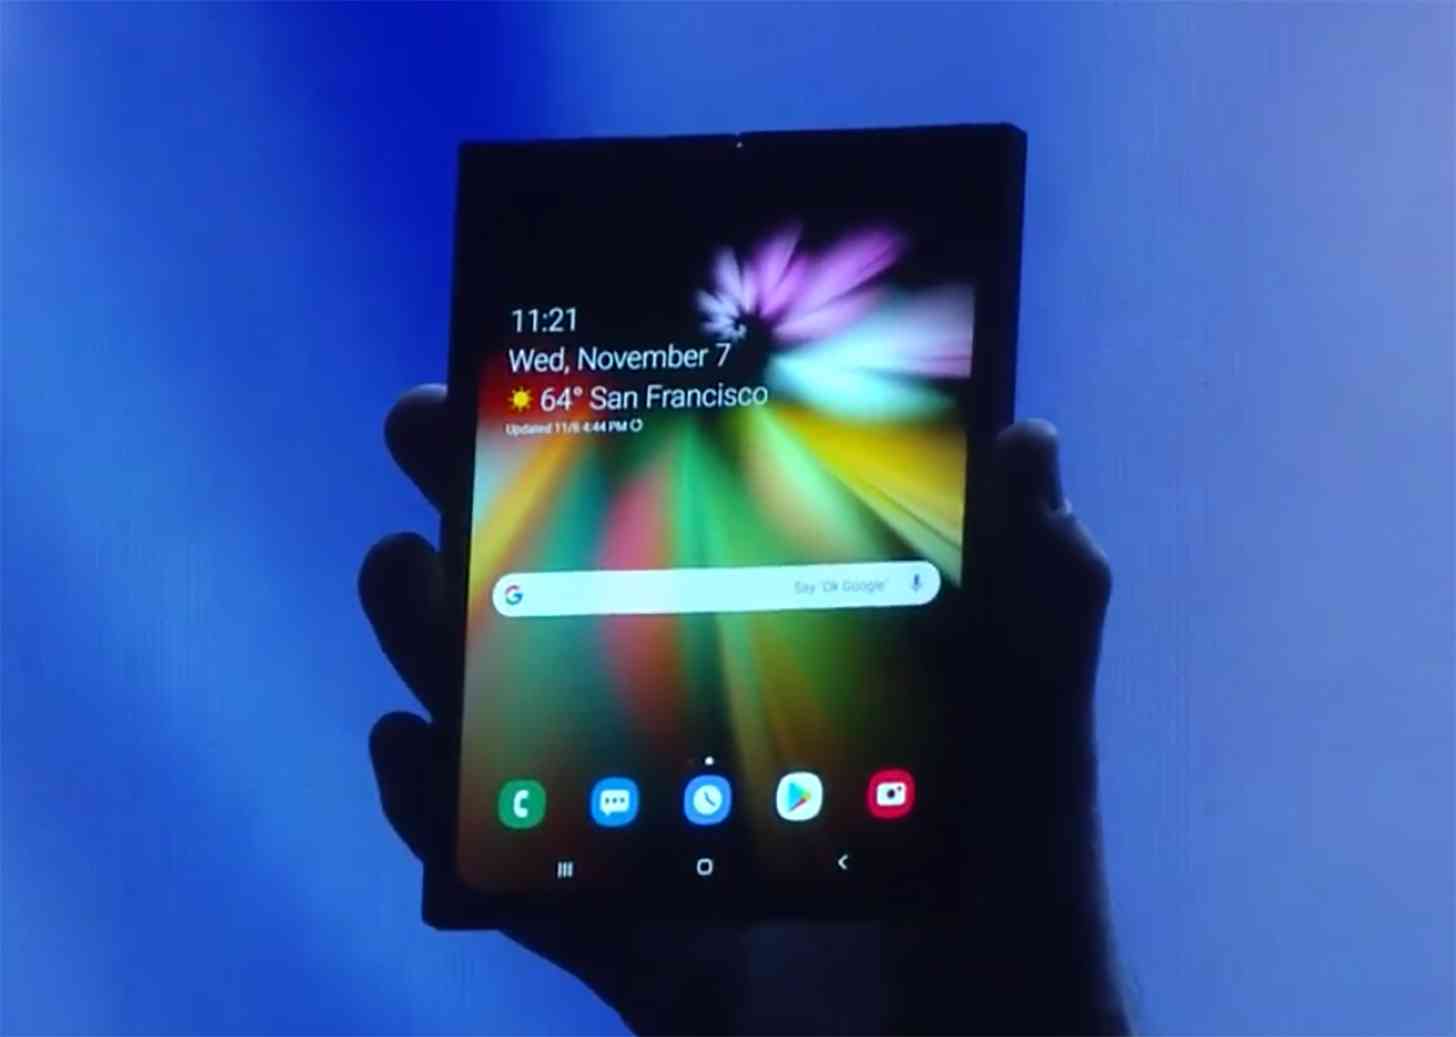 Samsung foldable smartphone demo